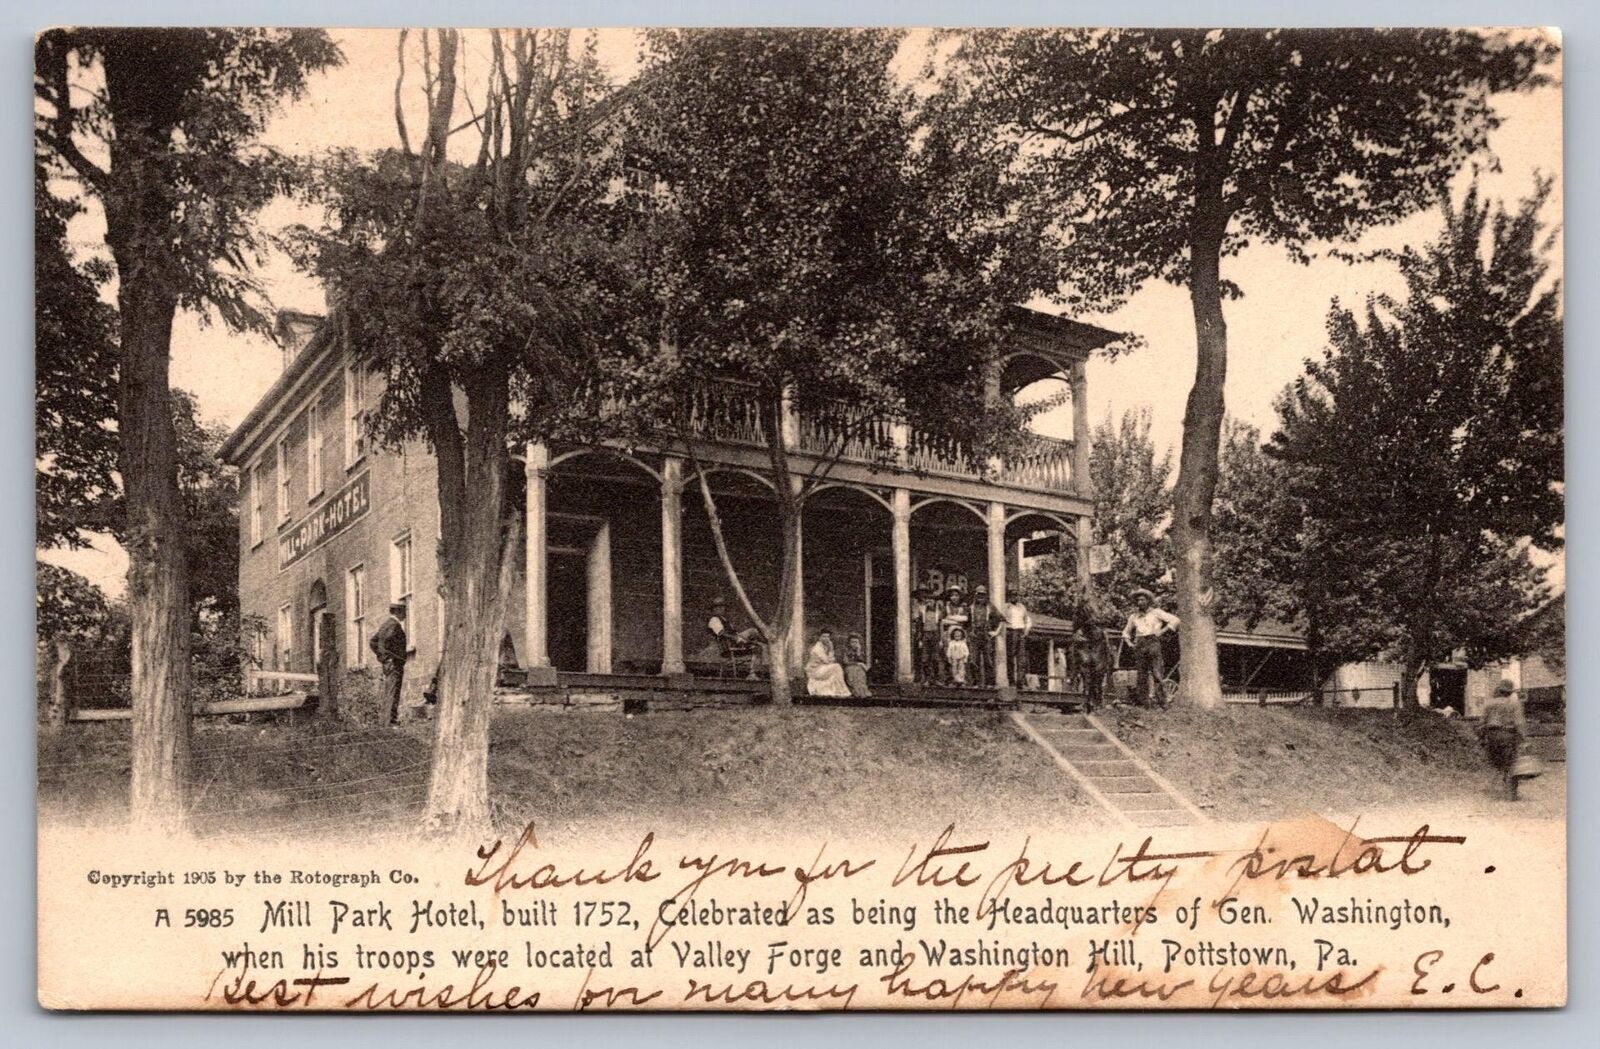 1906 MILL PARK HOTEL people on porch WASHINGTON HEADQUARTERS Rotograph